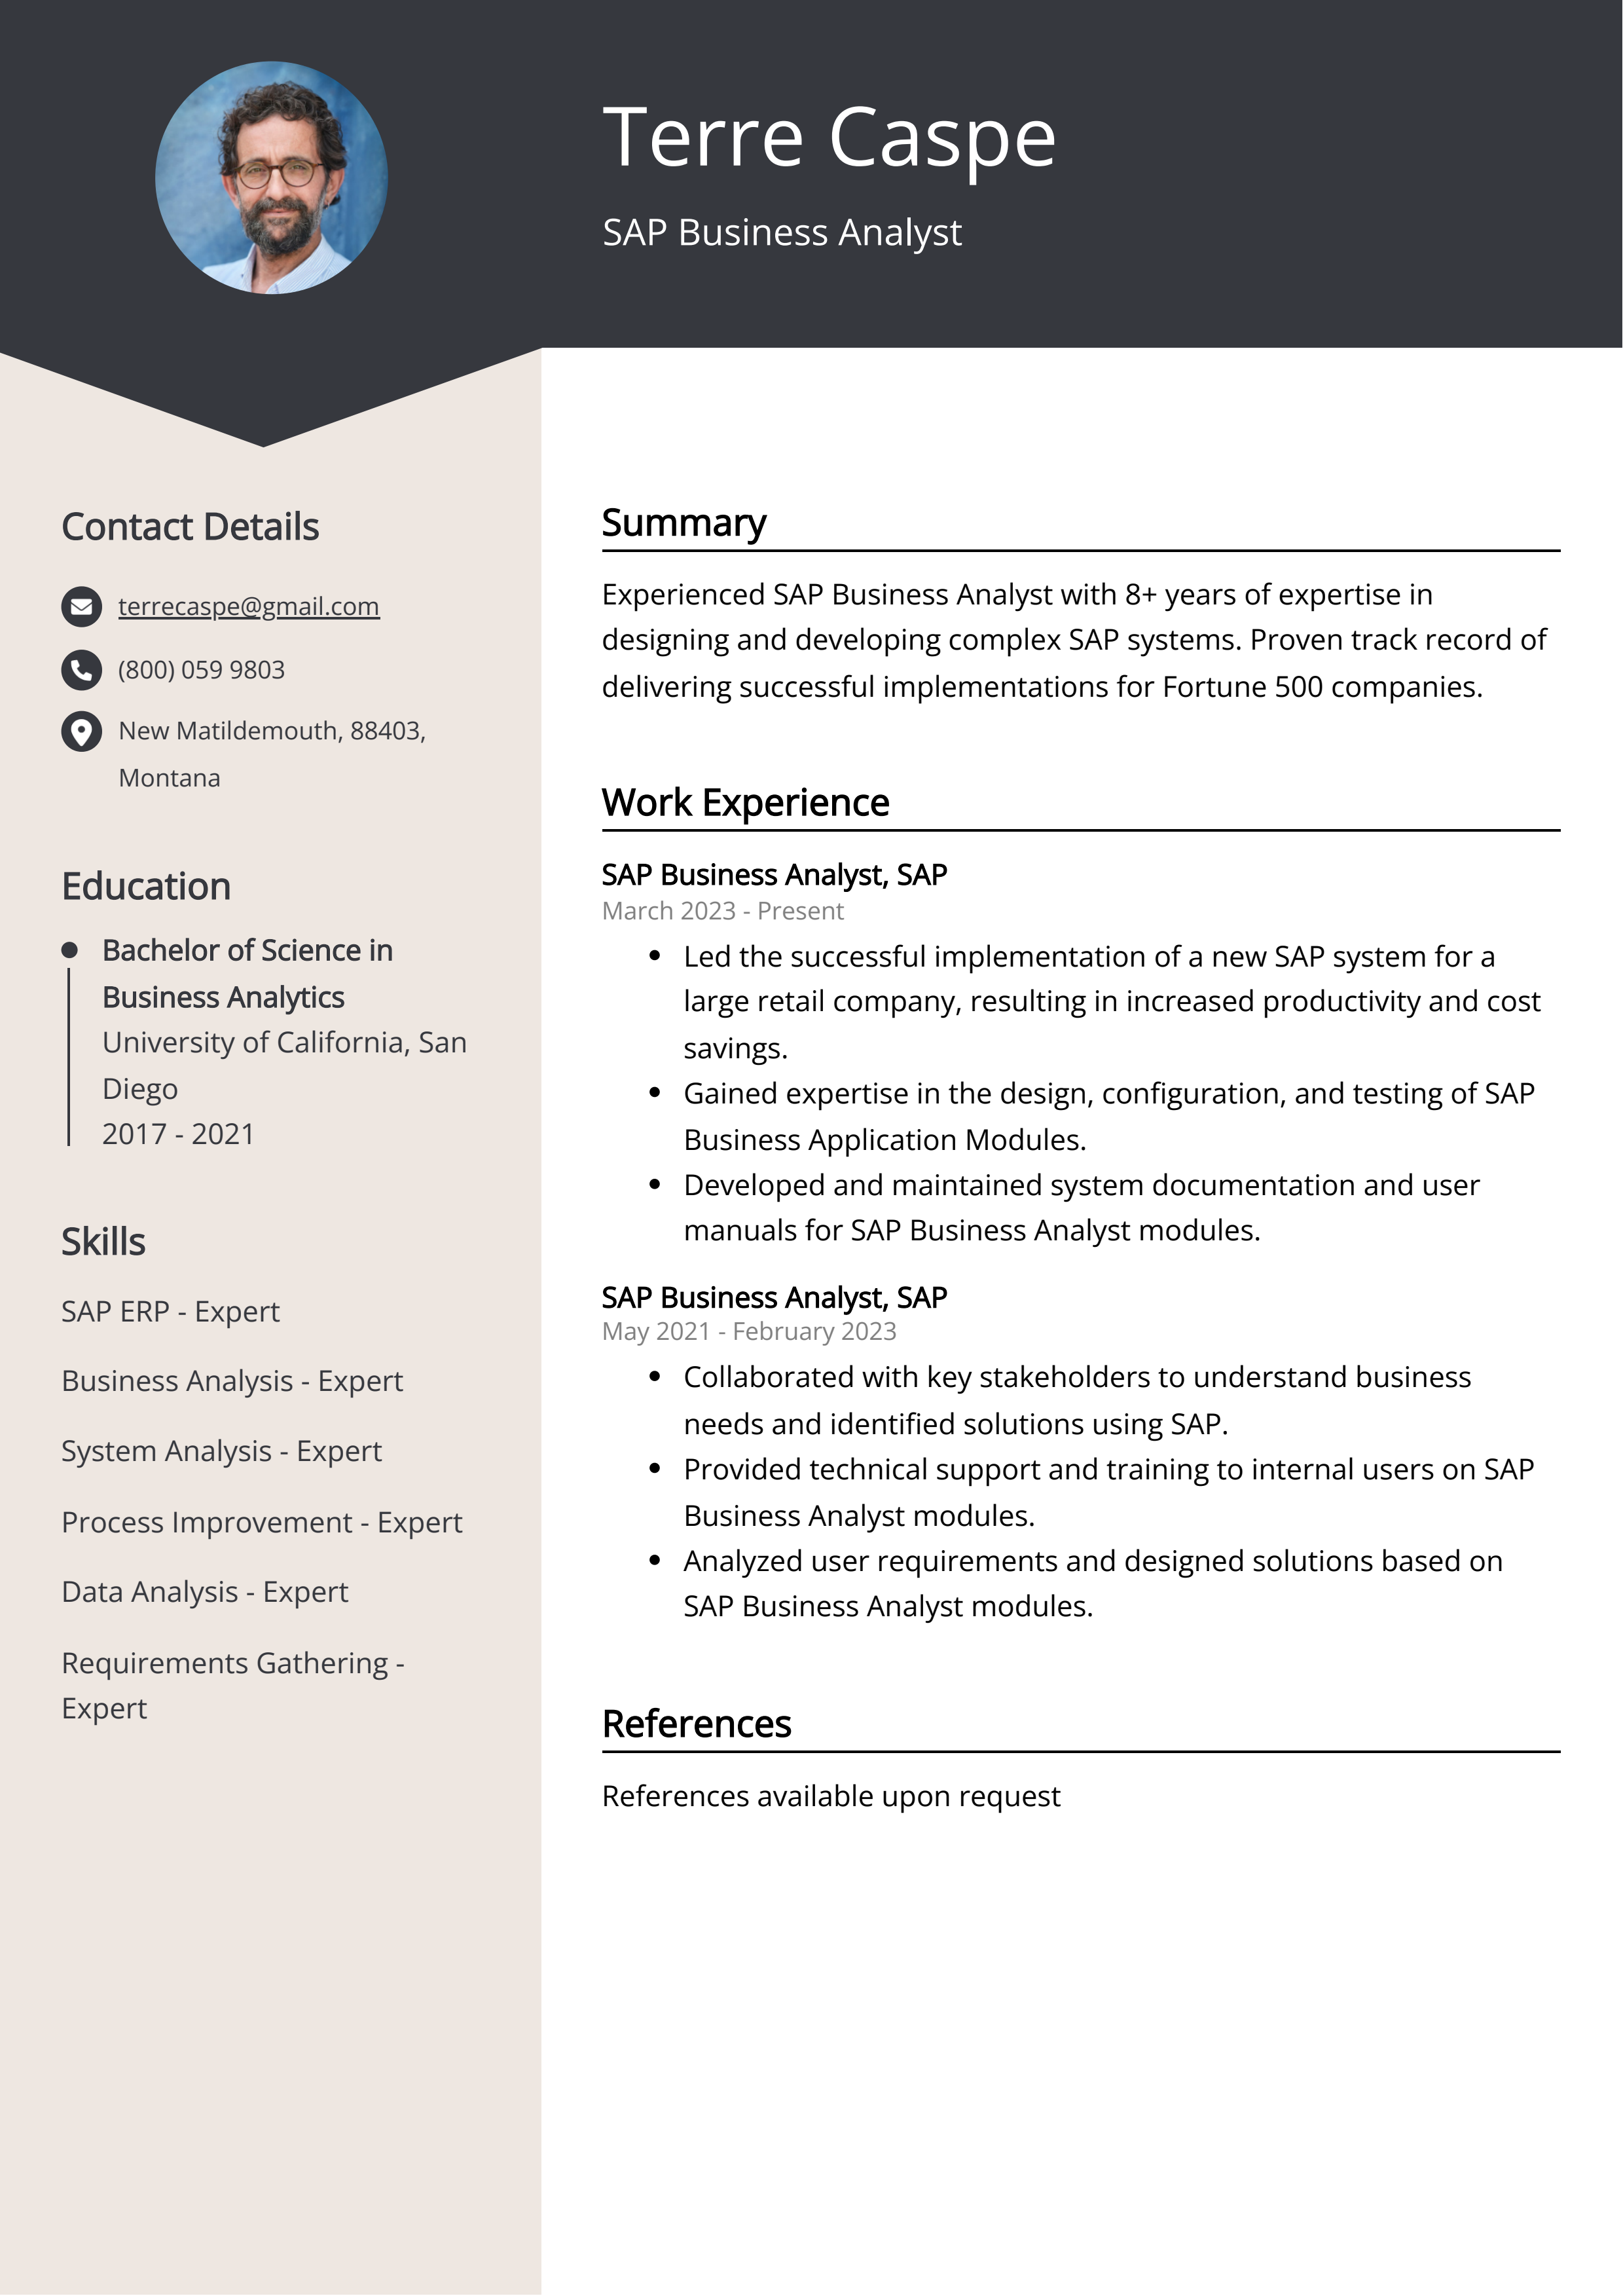 SAP Business Analyst CV Example